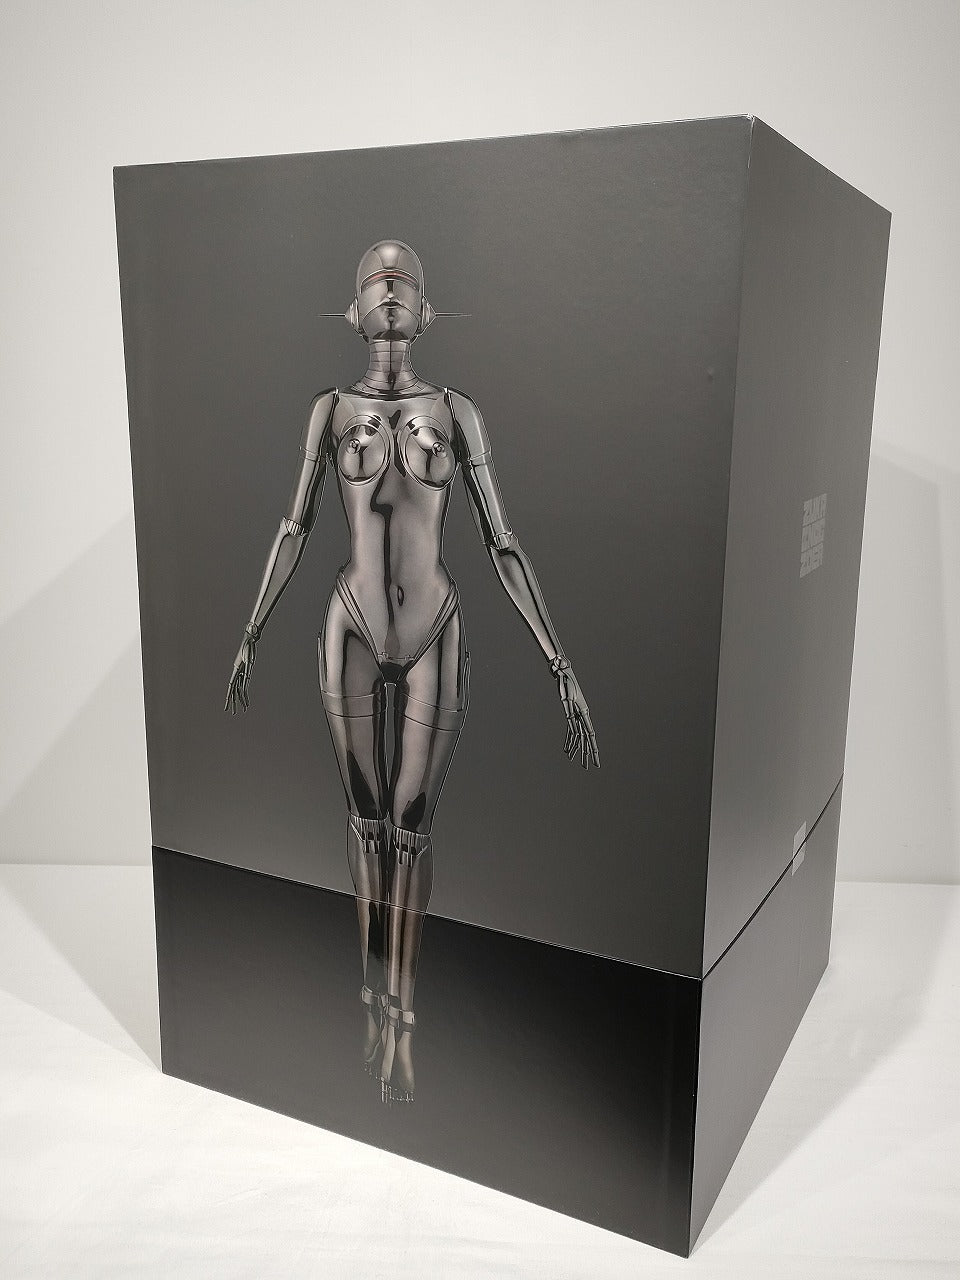 Hajime Sorayama - Robot sexy galleggiante _scala 1/4 (nero)